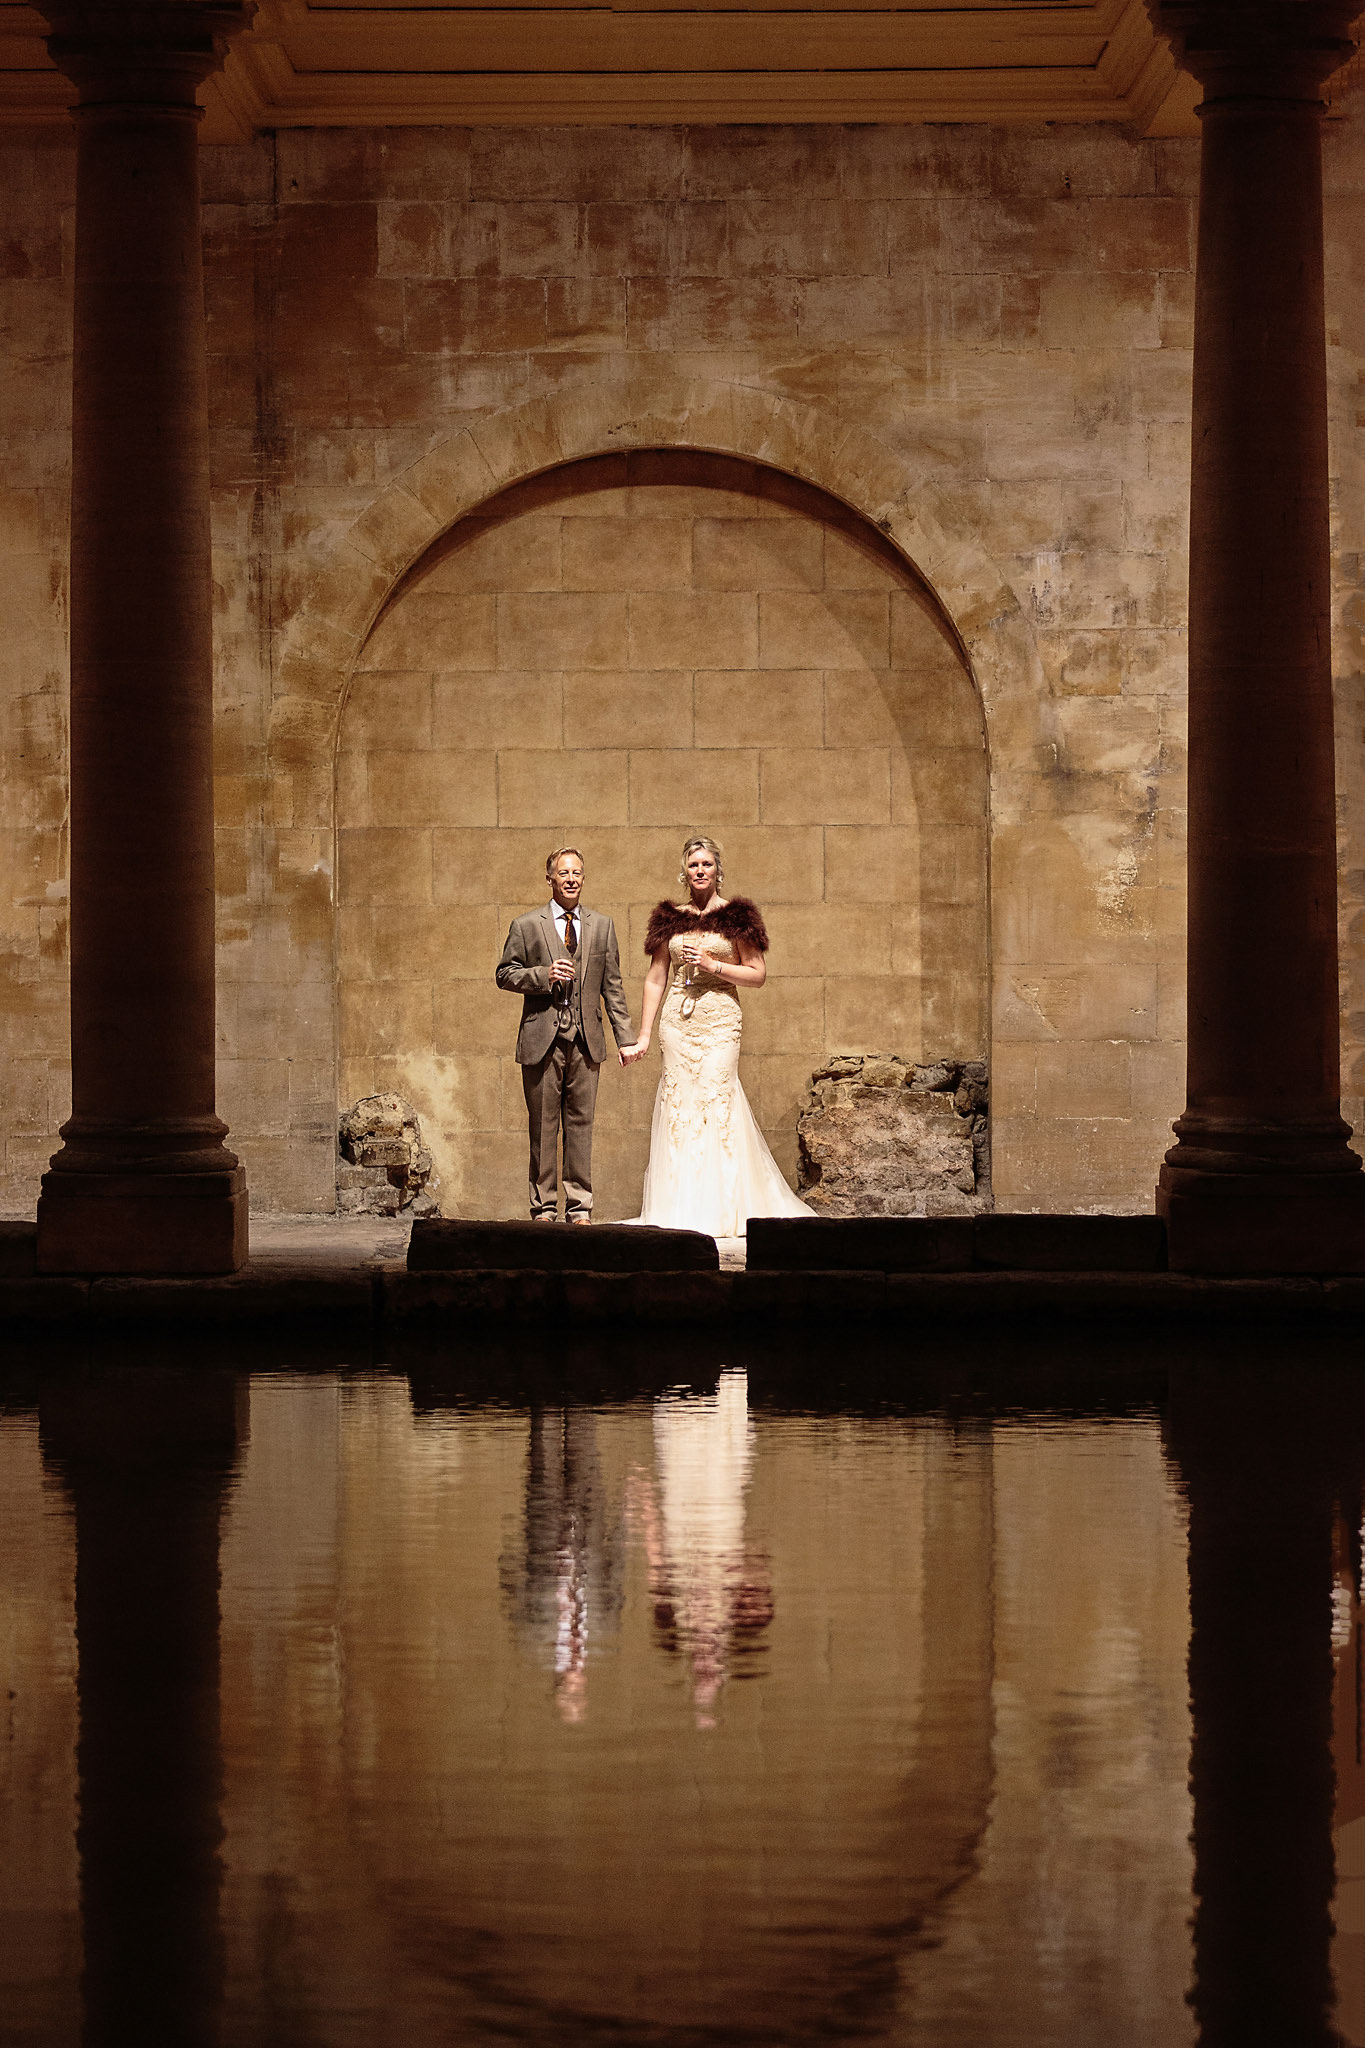 Wedding photography at the Roman Baths in Bath